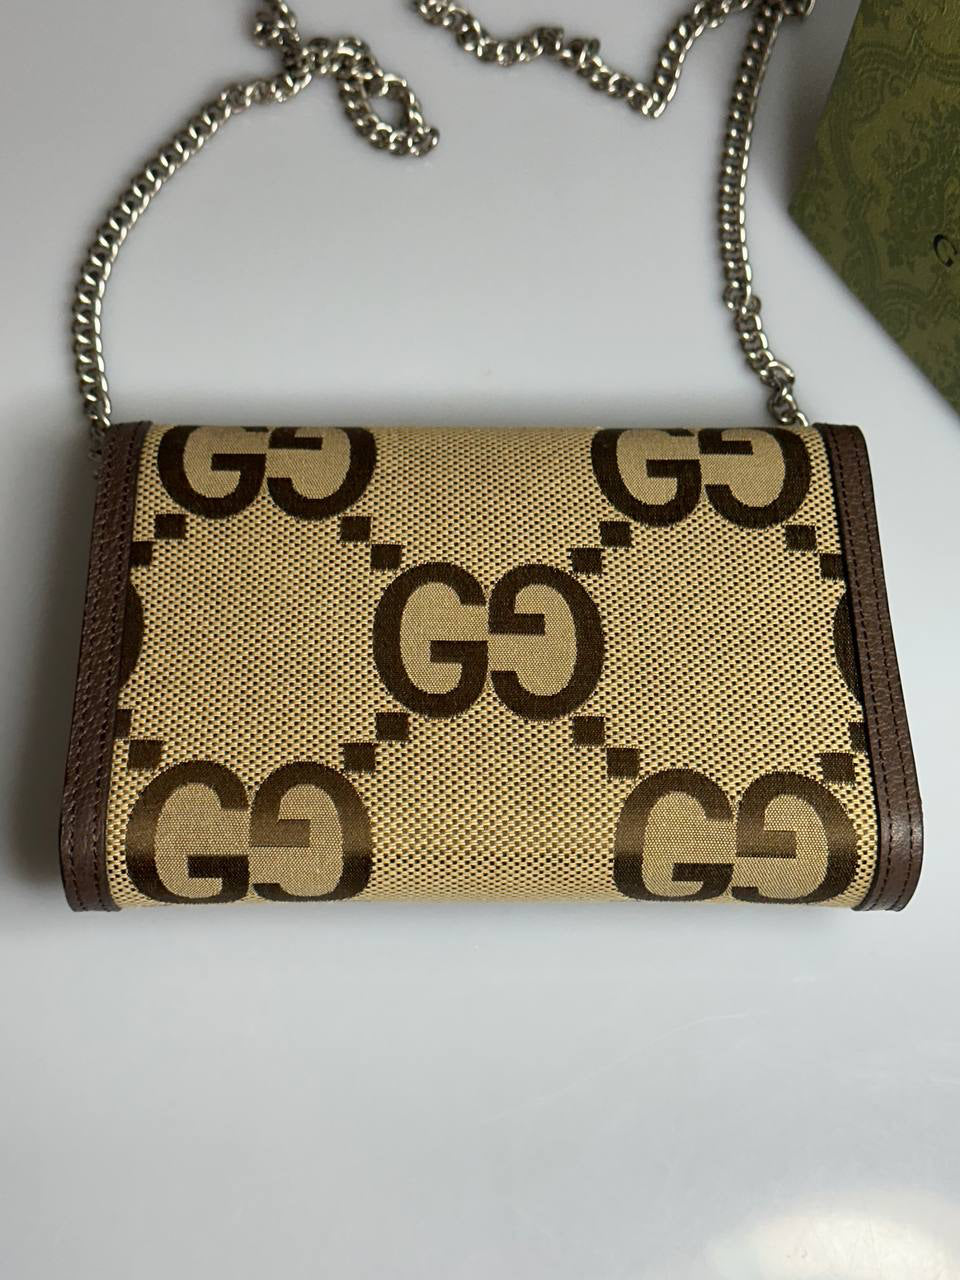 Gucci Dionysus Jumbo GG crossbody bag